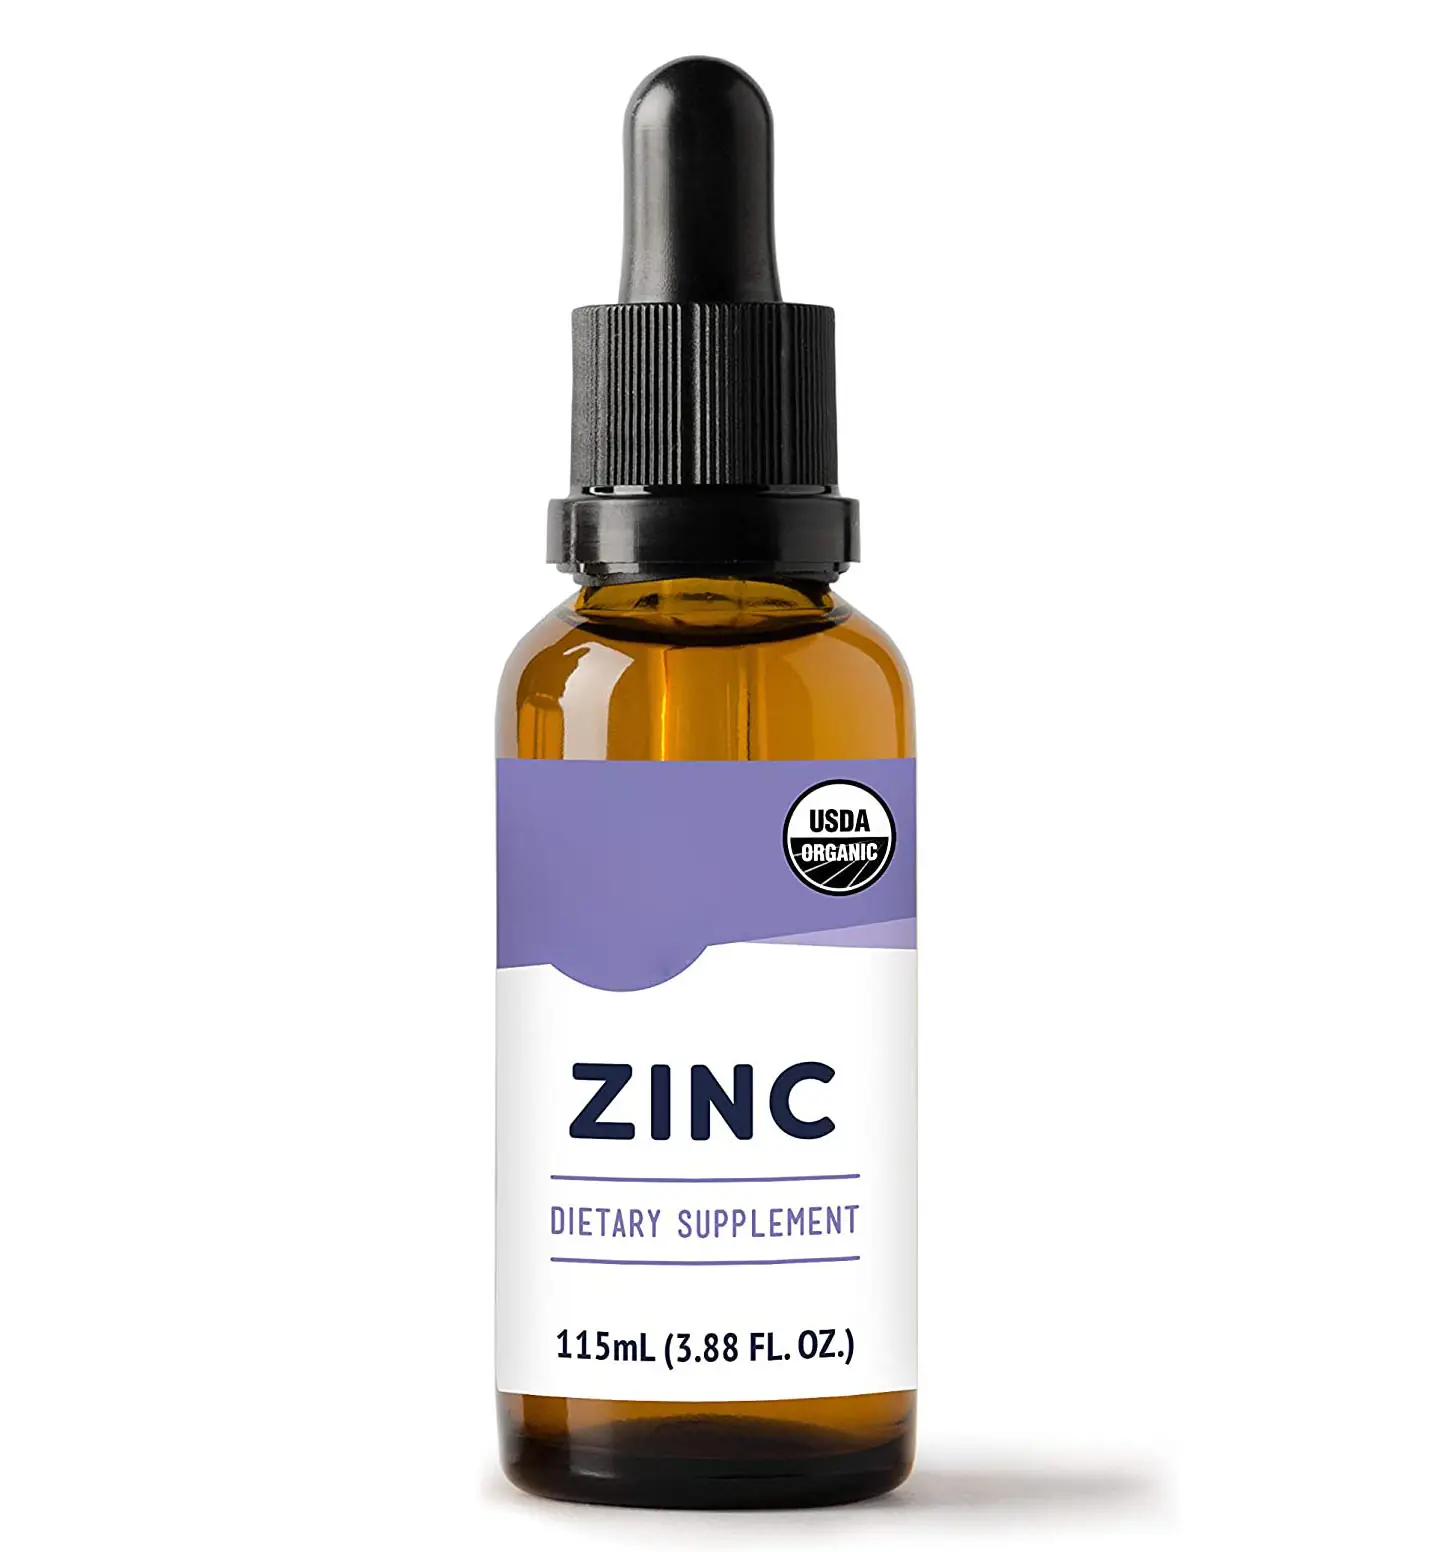 Bones Supplements Organic Vegan Oral Liquid Zinc Calcium Iron Vitamin D3 K2 Drops for Immune Support